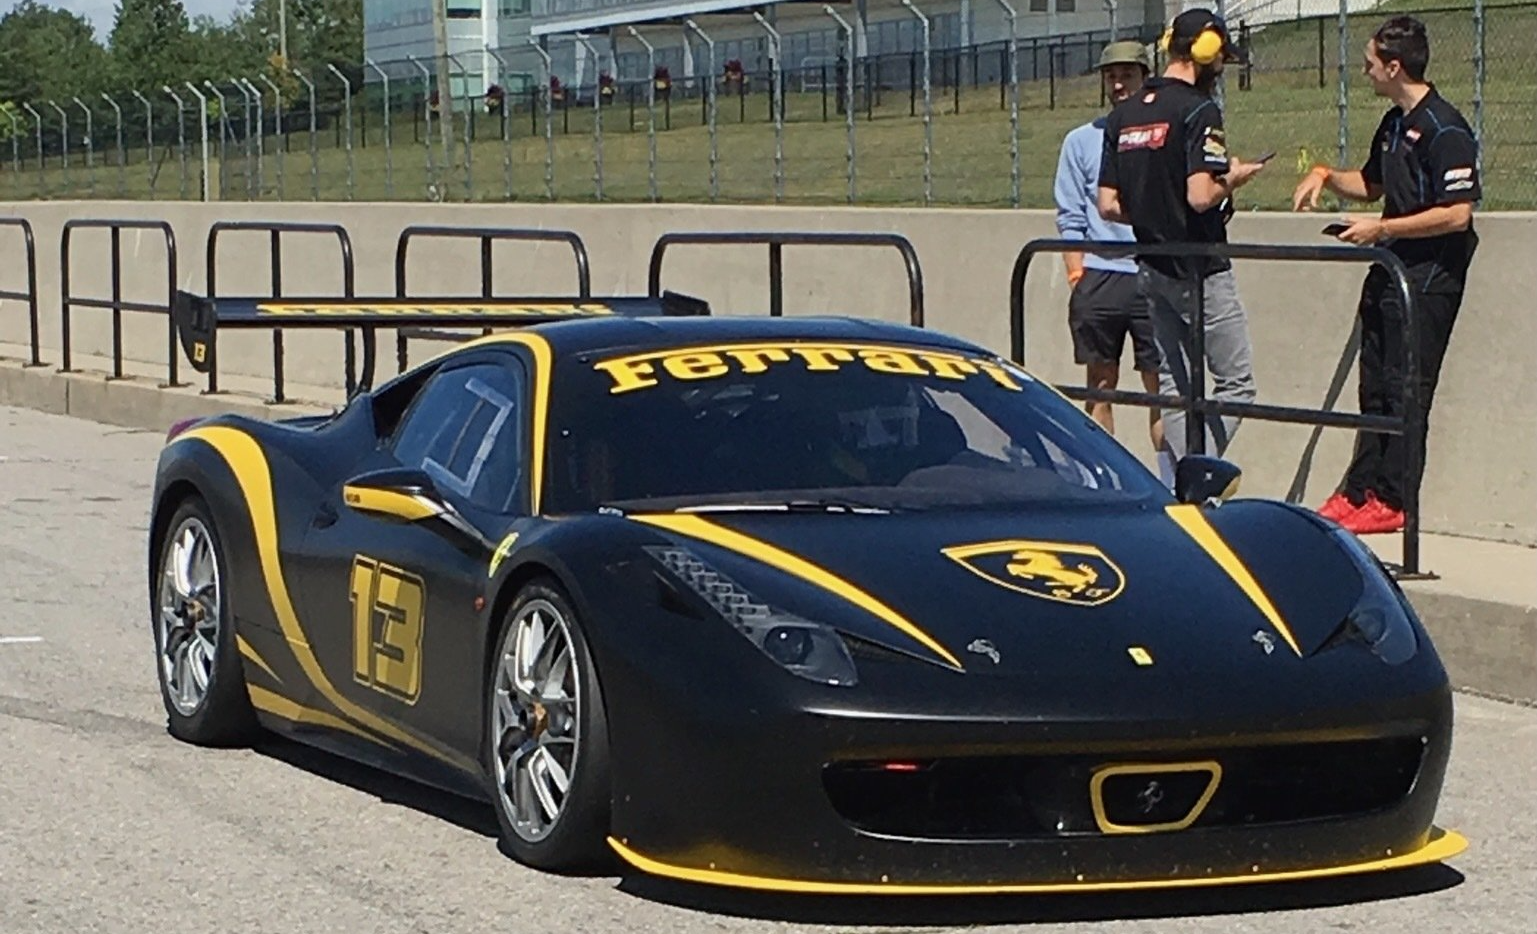 Ferrari at 6th Gear Track Day